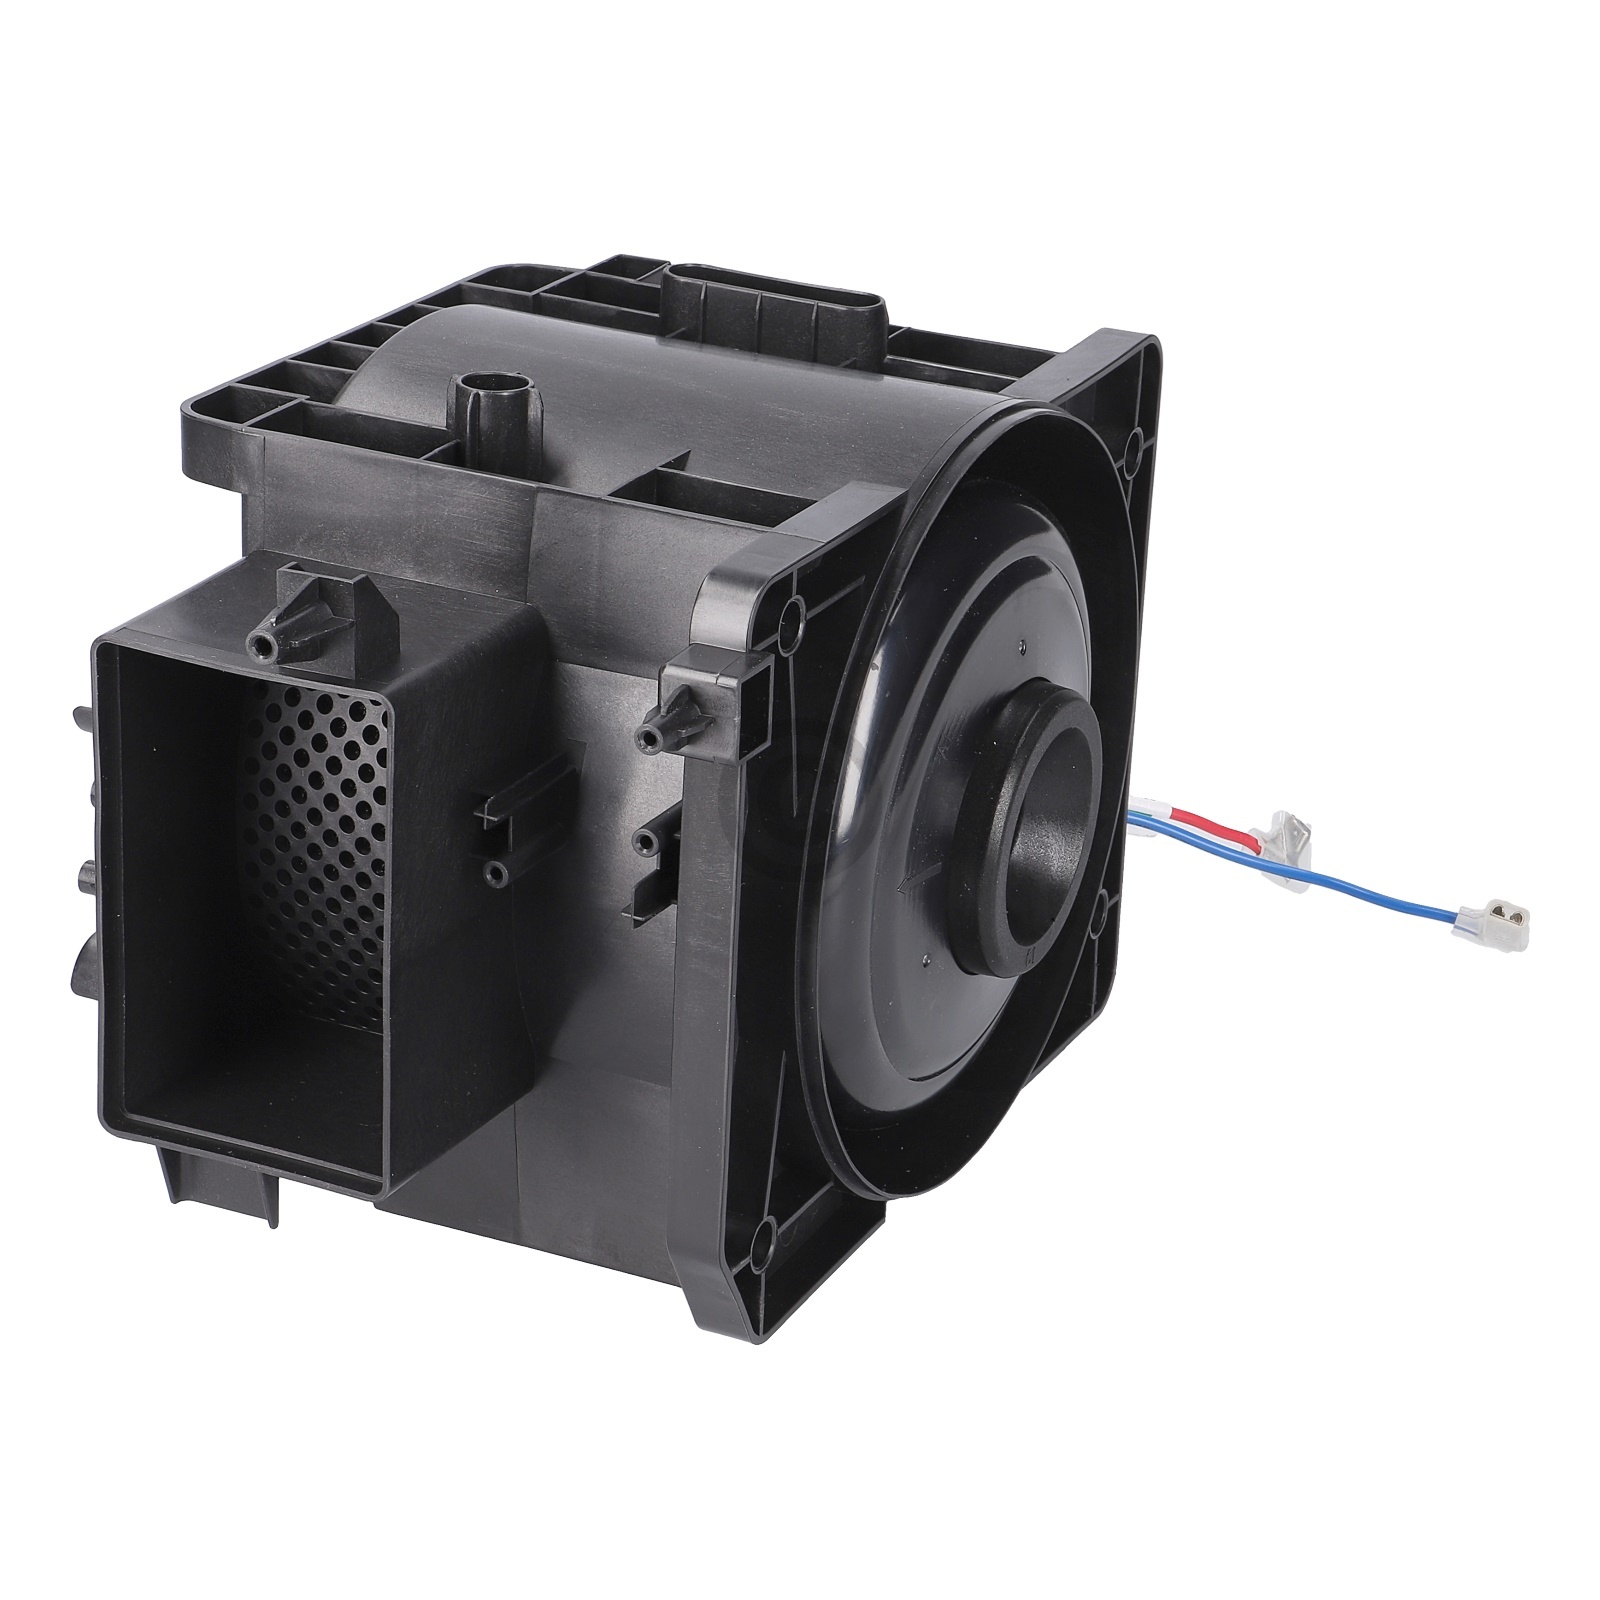 Ventilatormotor für X2OmniStation Ecovacs 201-2228-13A5 von Saugroboter